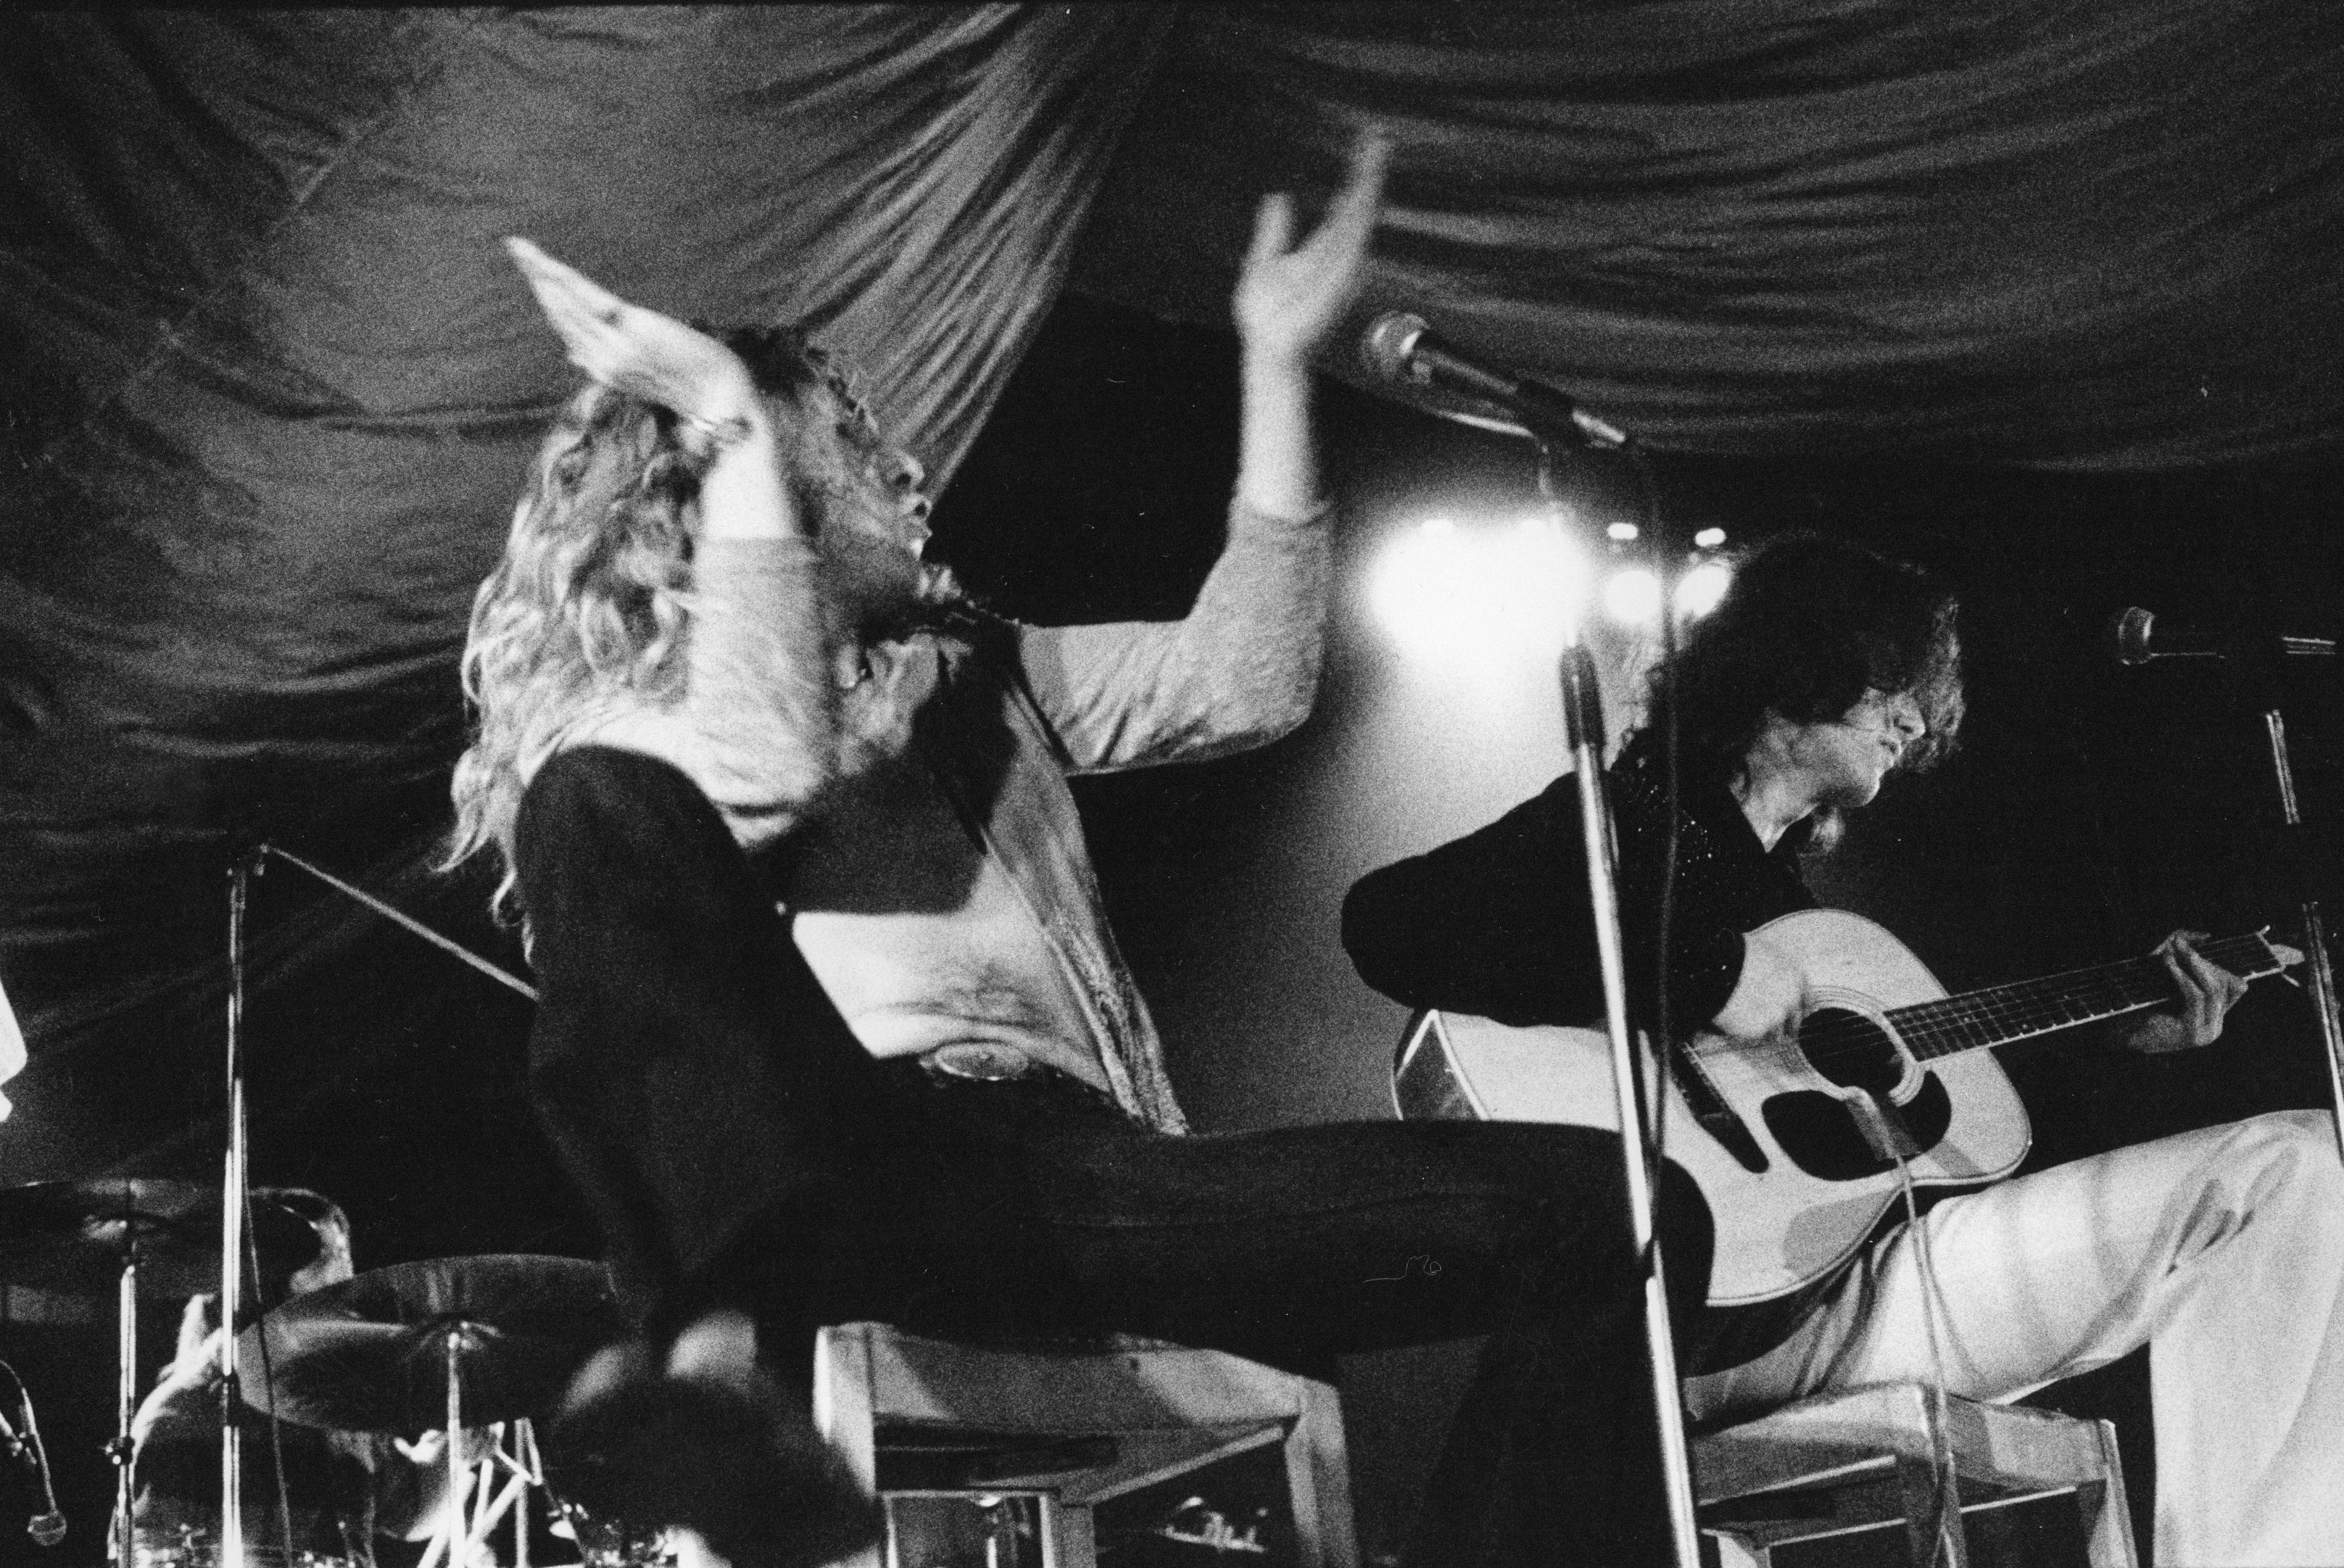 Unknown Portrait Photograph - Led Zeppelin Rocking Out on Stage Vintage Original Photograph